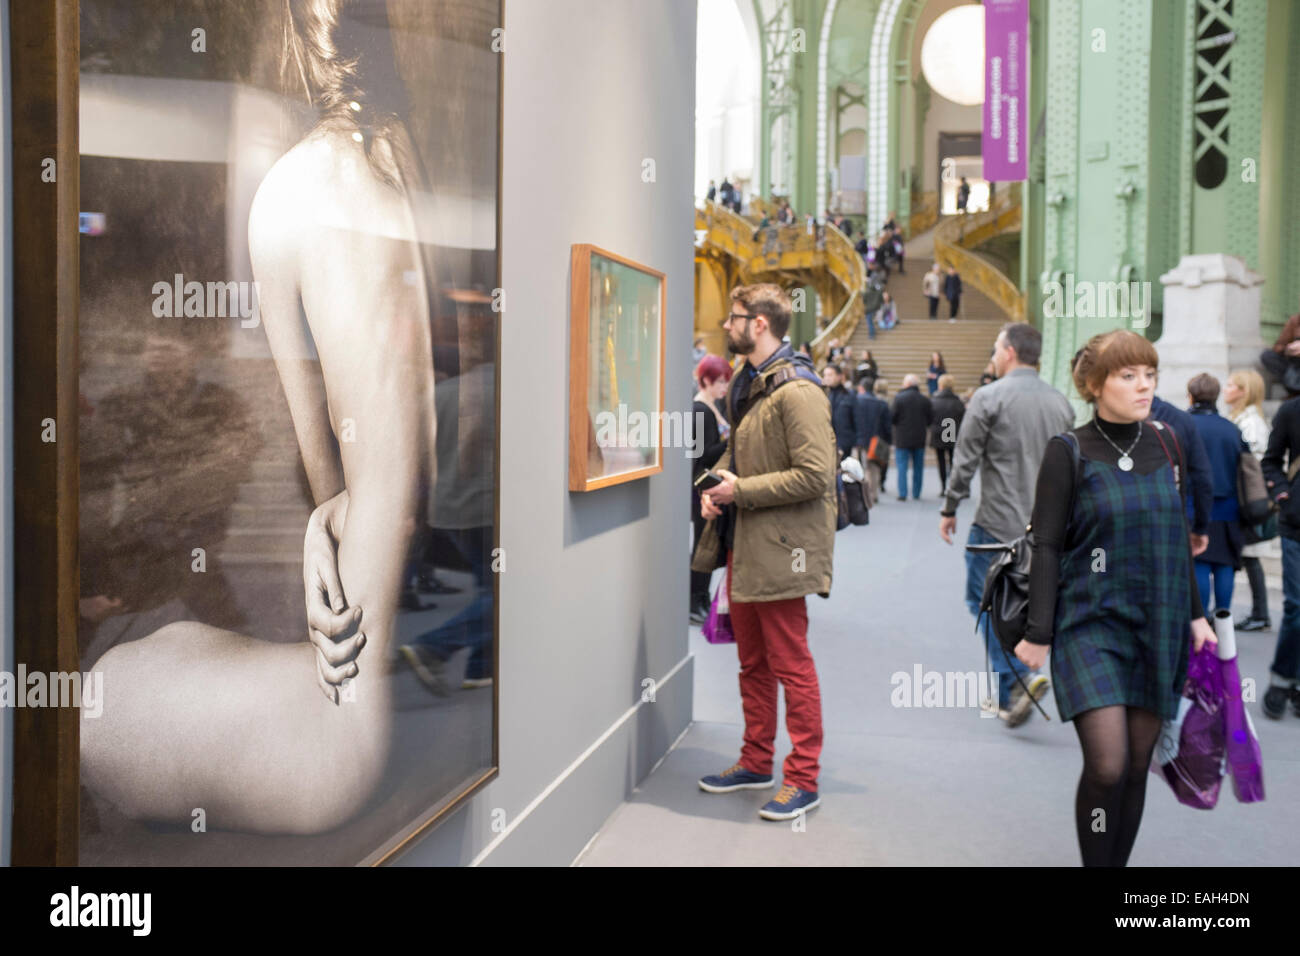 Visitors viewing images at Paris Photo 2014 Stock Photo